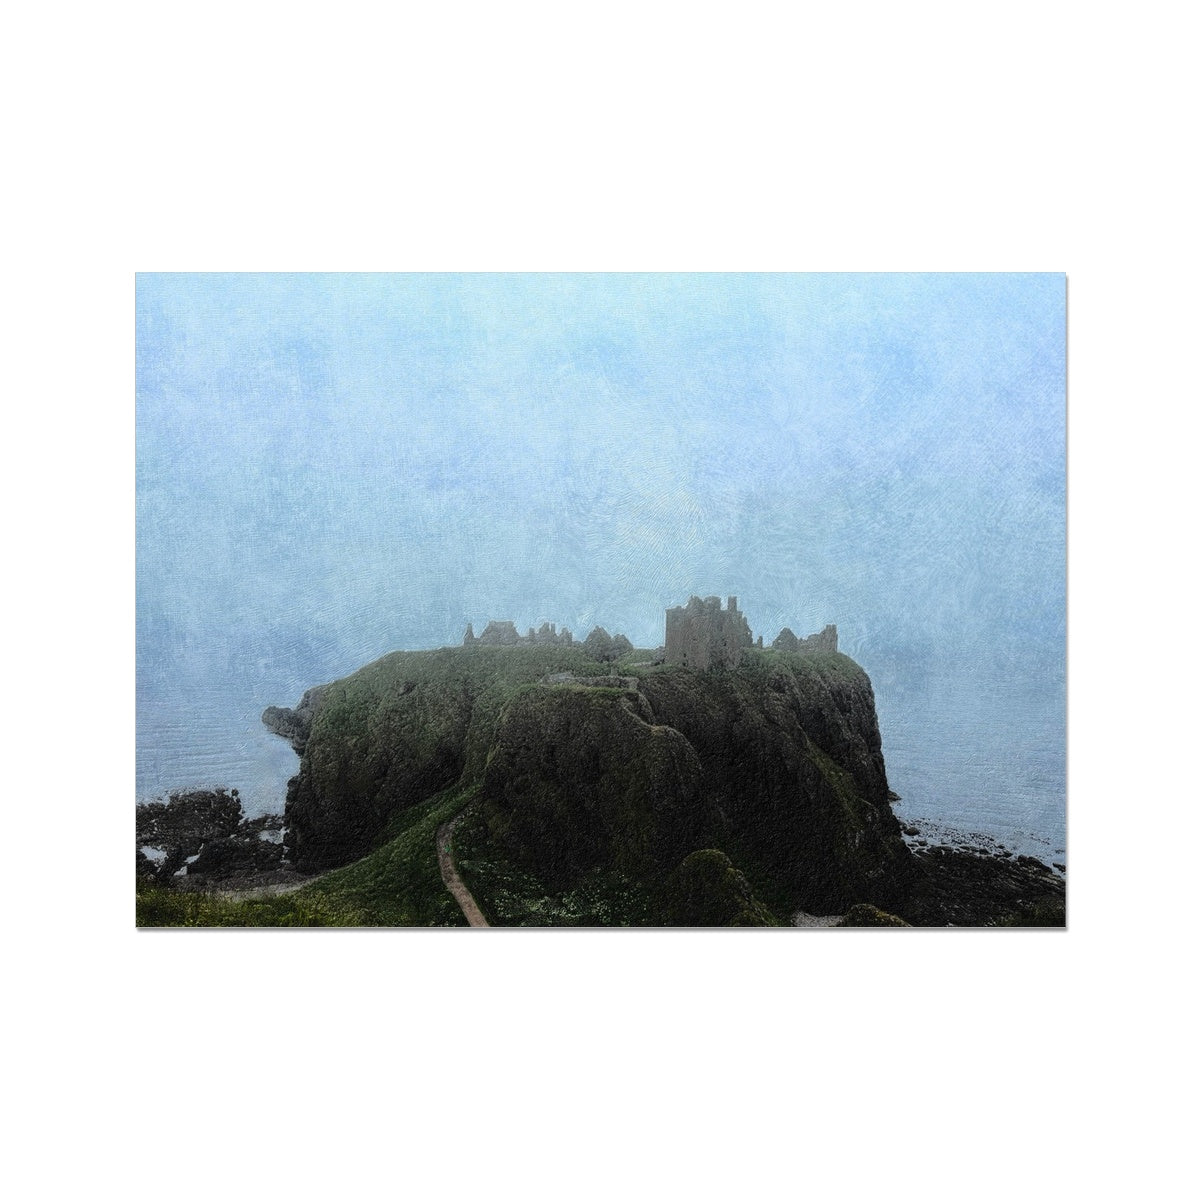 Dunnottar Castle Mist Painting | Fine Art Prints From Scotland-Unframed Prints-Scottish Castles Art Gallery-A2 Landscape-Paintings, Prints, Homeware, Art Gifts From Scotland By Scottish Artist Kevin Hunter